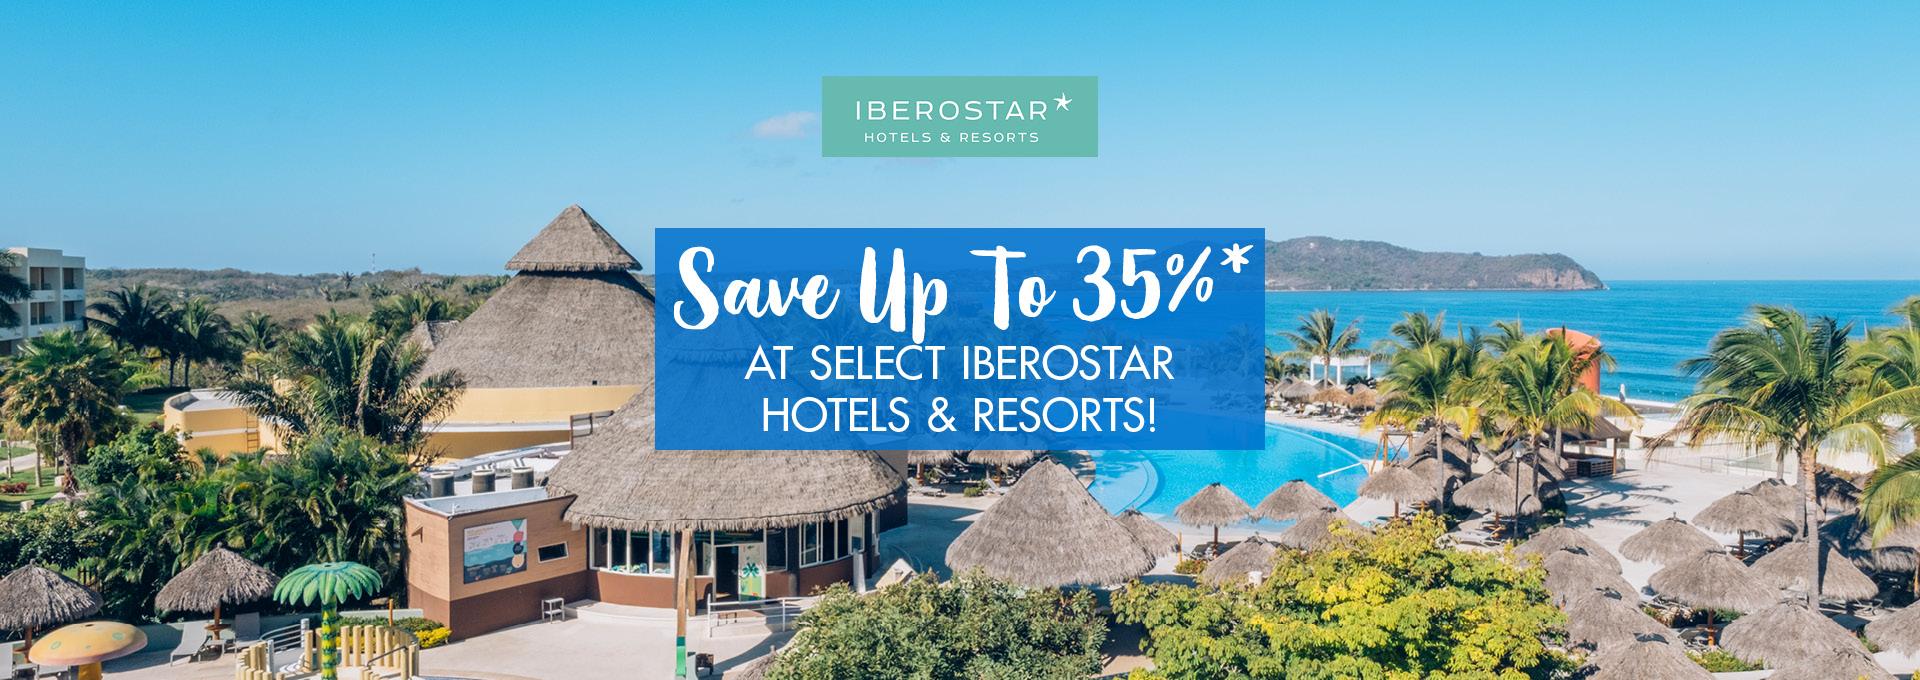 Save up to 35% at select Iberostar Hotels & Resorts